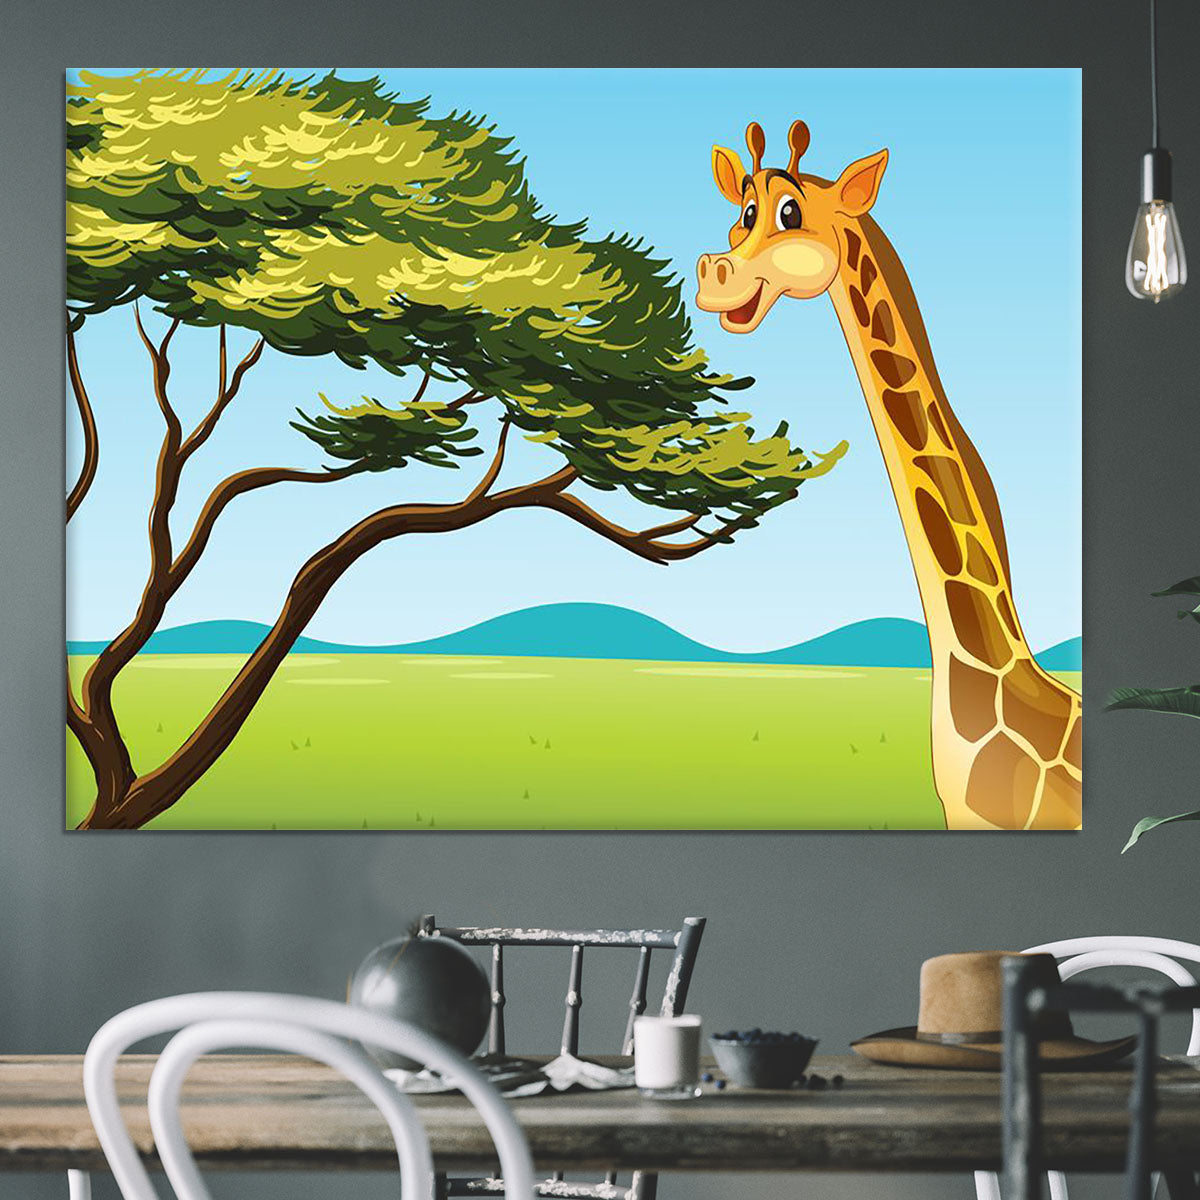 Illustration of a giraffe eating Canvas Print or Poster - Canvas Art Rocks - 3